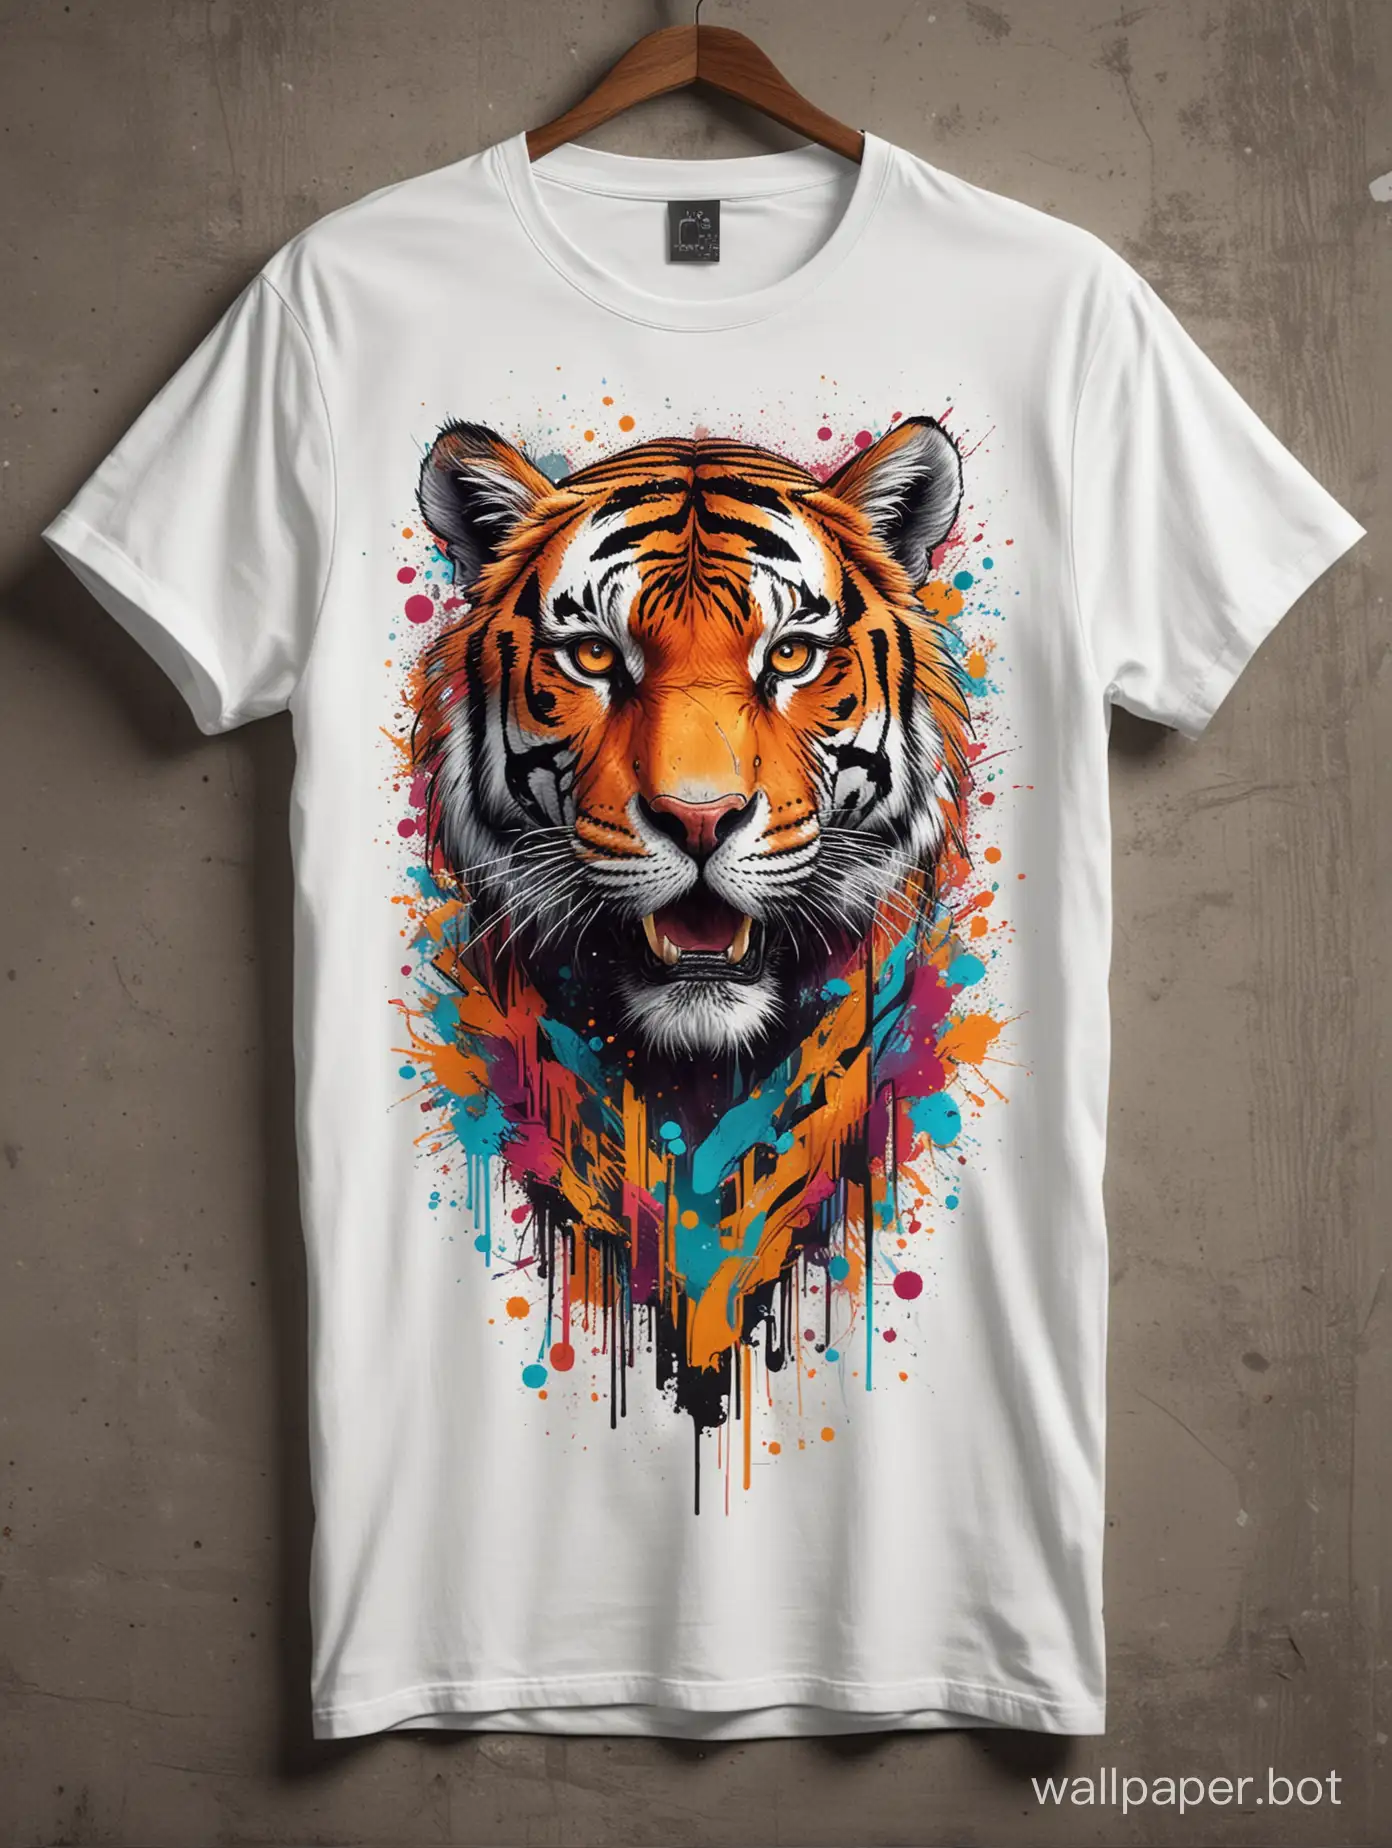 t shirt mockup template, long shirt, street art style, tiger illustration on shirt, lineart, explosive colors